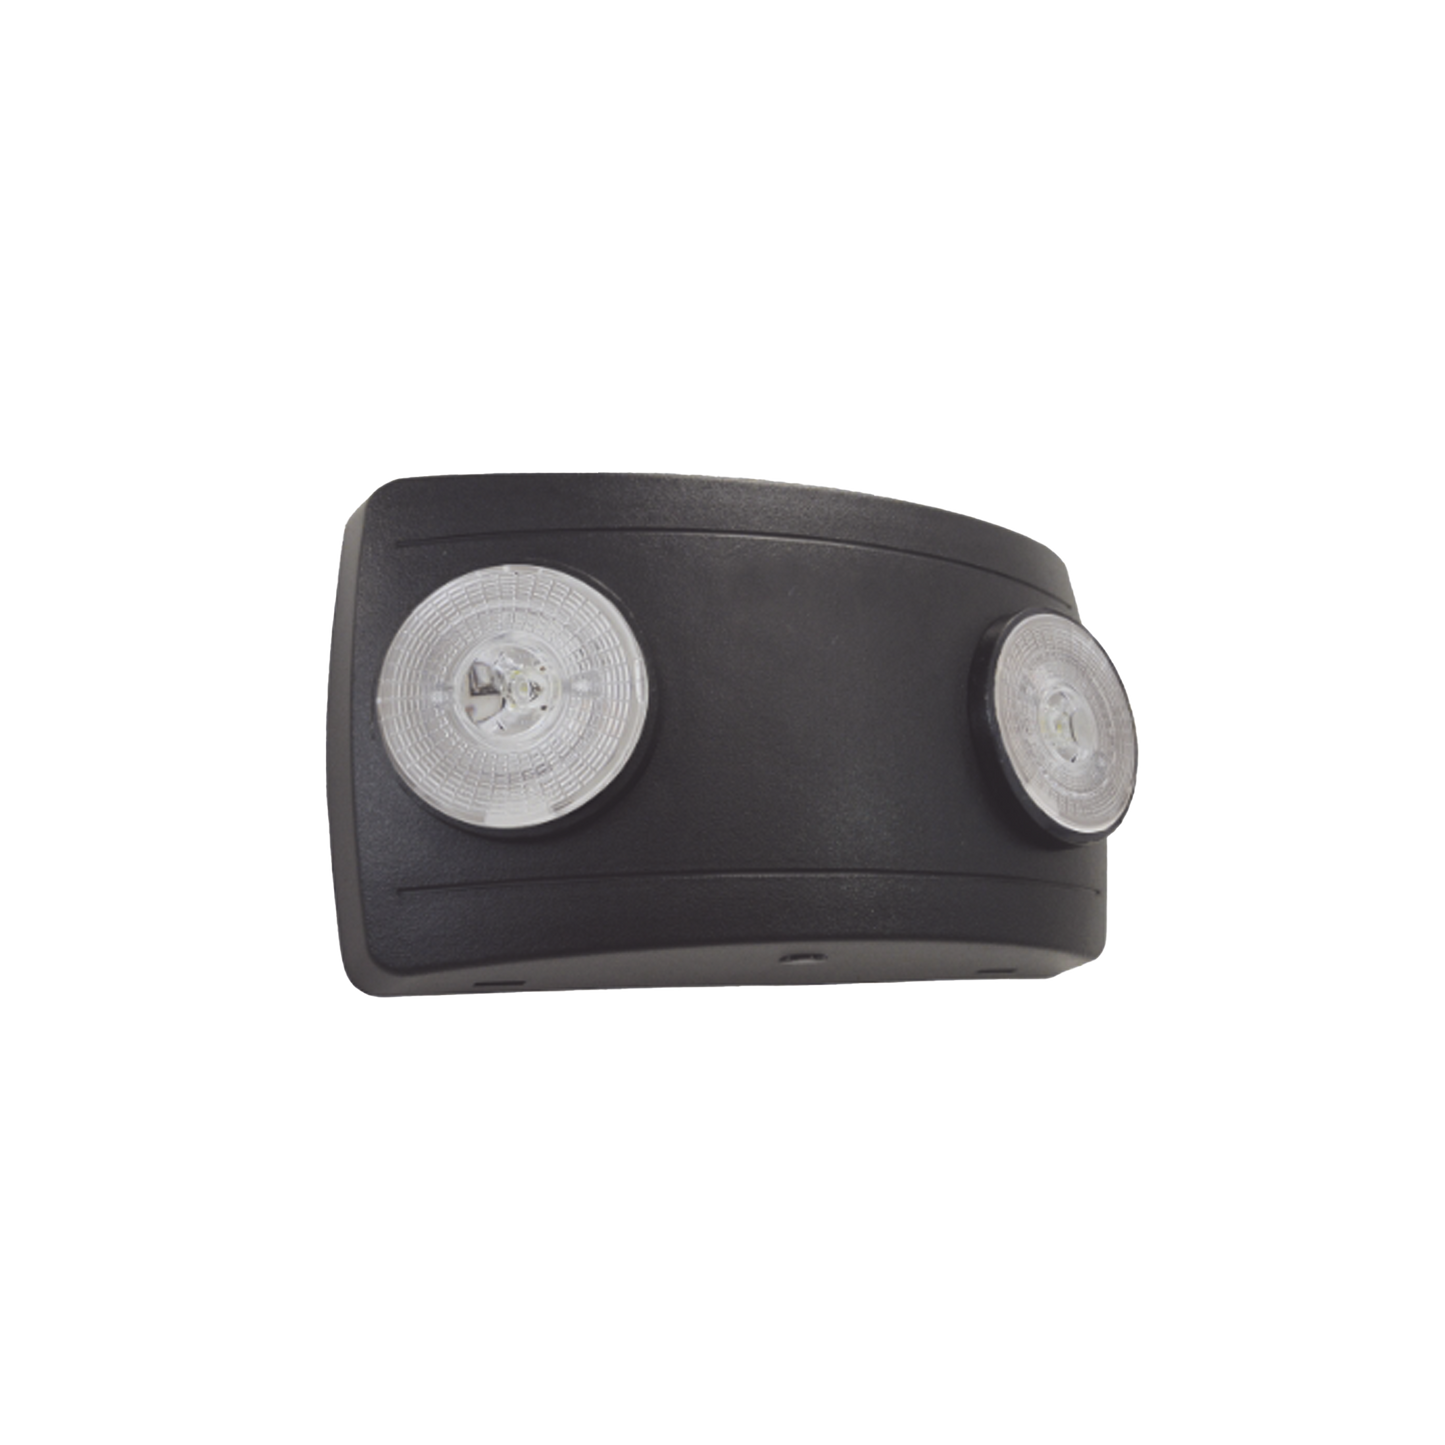 Luz de Emergencia Dual LED ultra compacta/150 lúmenes/Luz fría/Batería de Respaldo Incluida/Botón de test / Color Negro